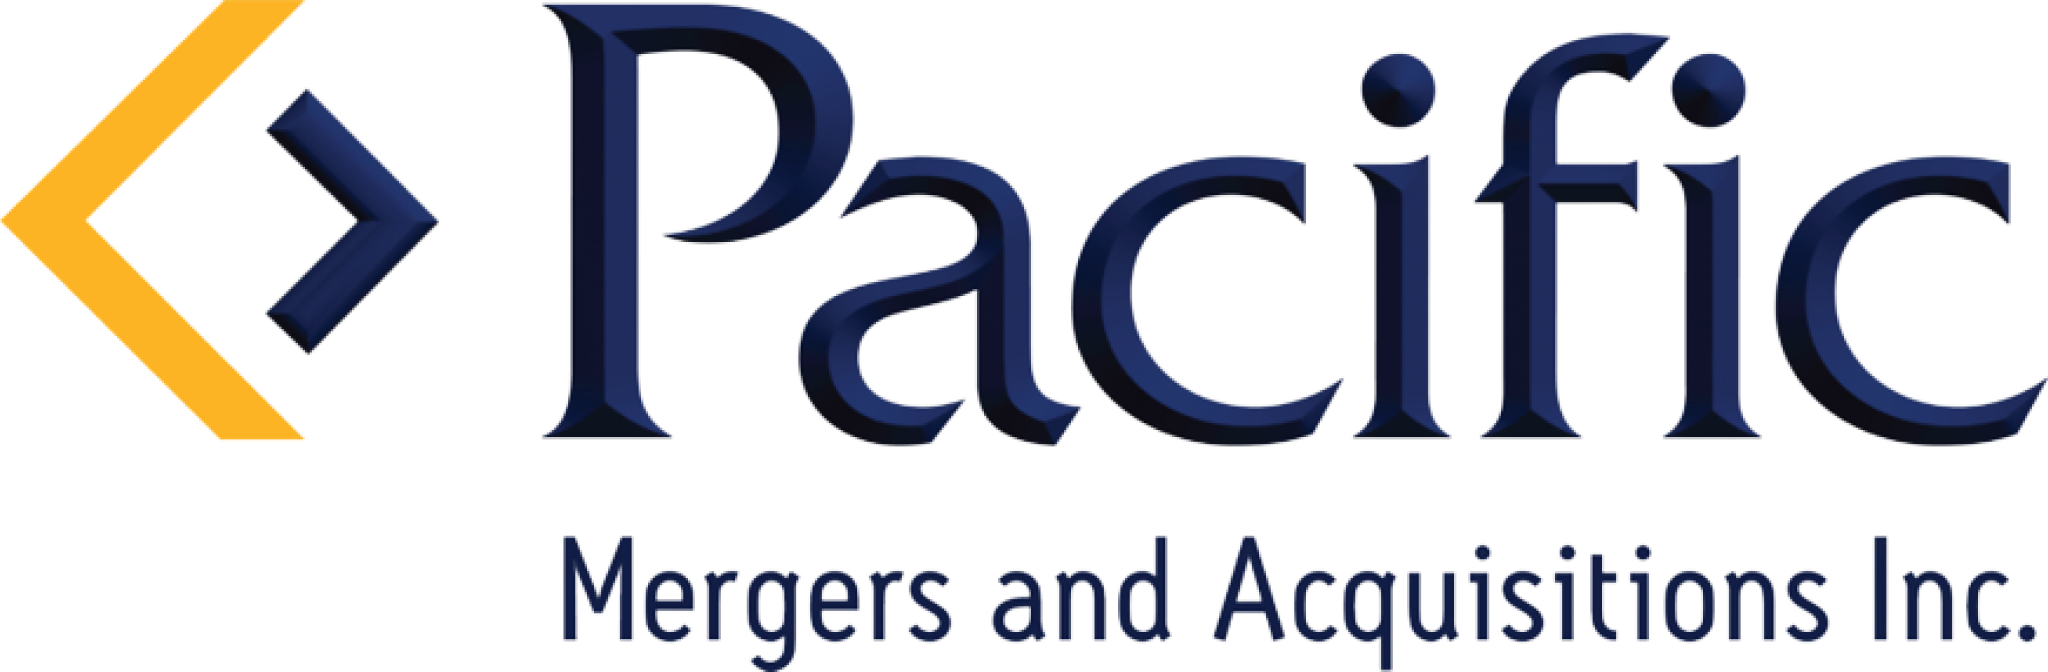 pacific m&a logo